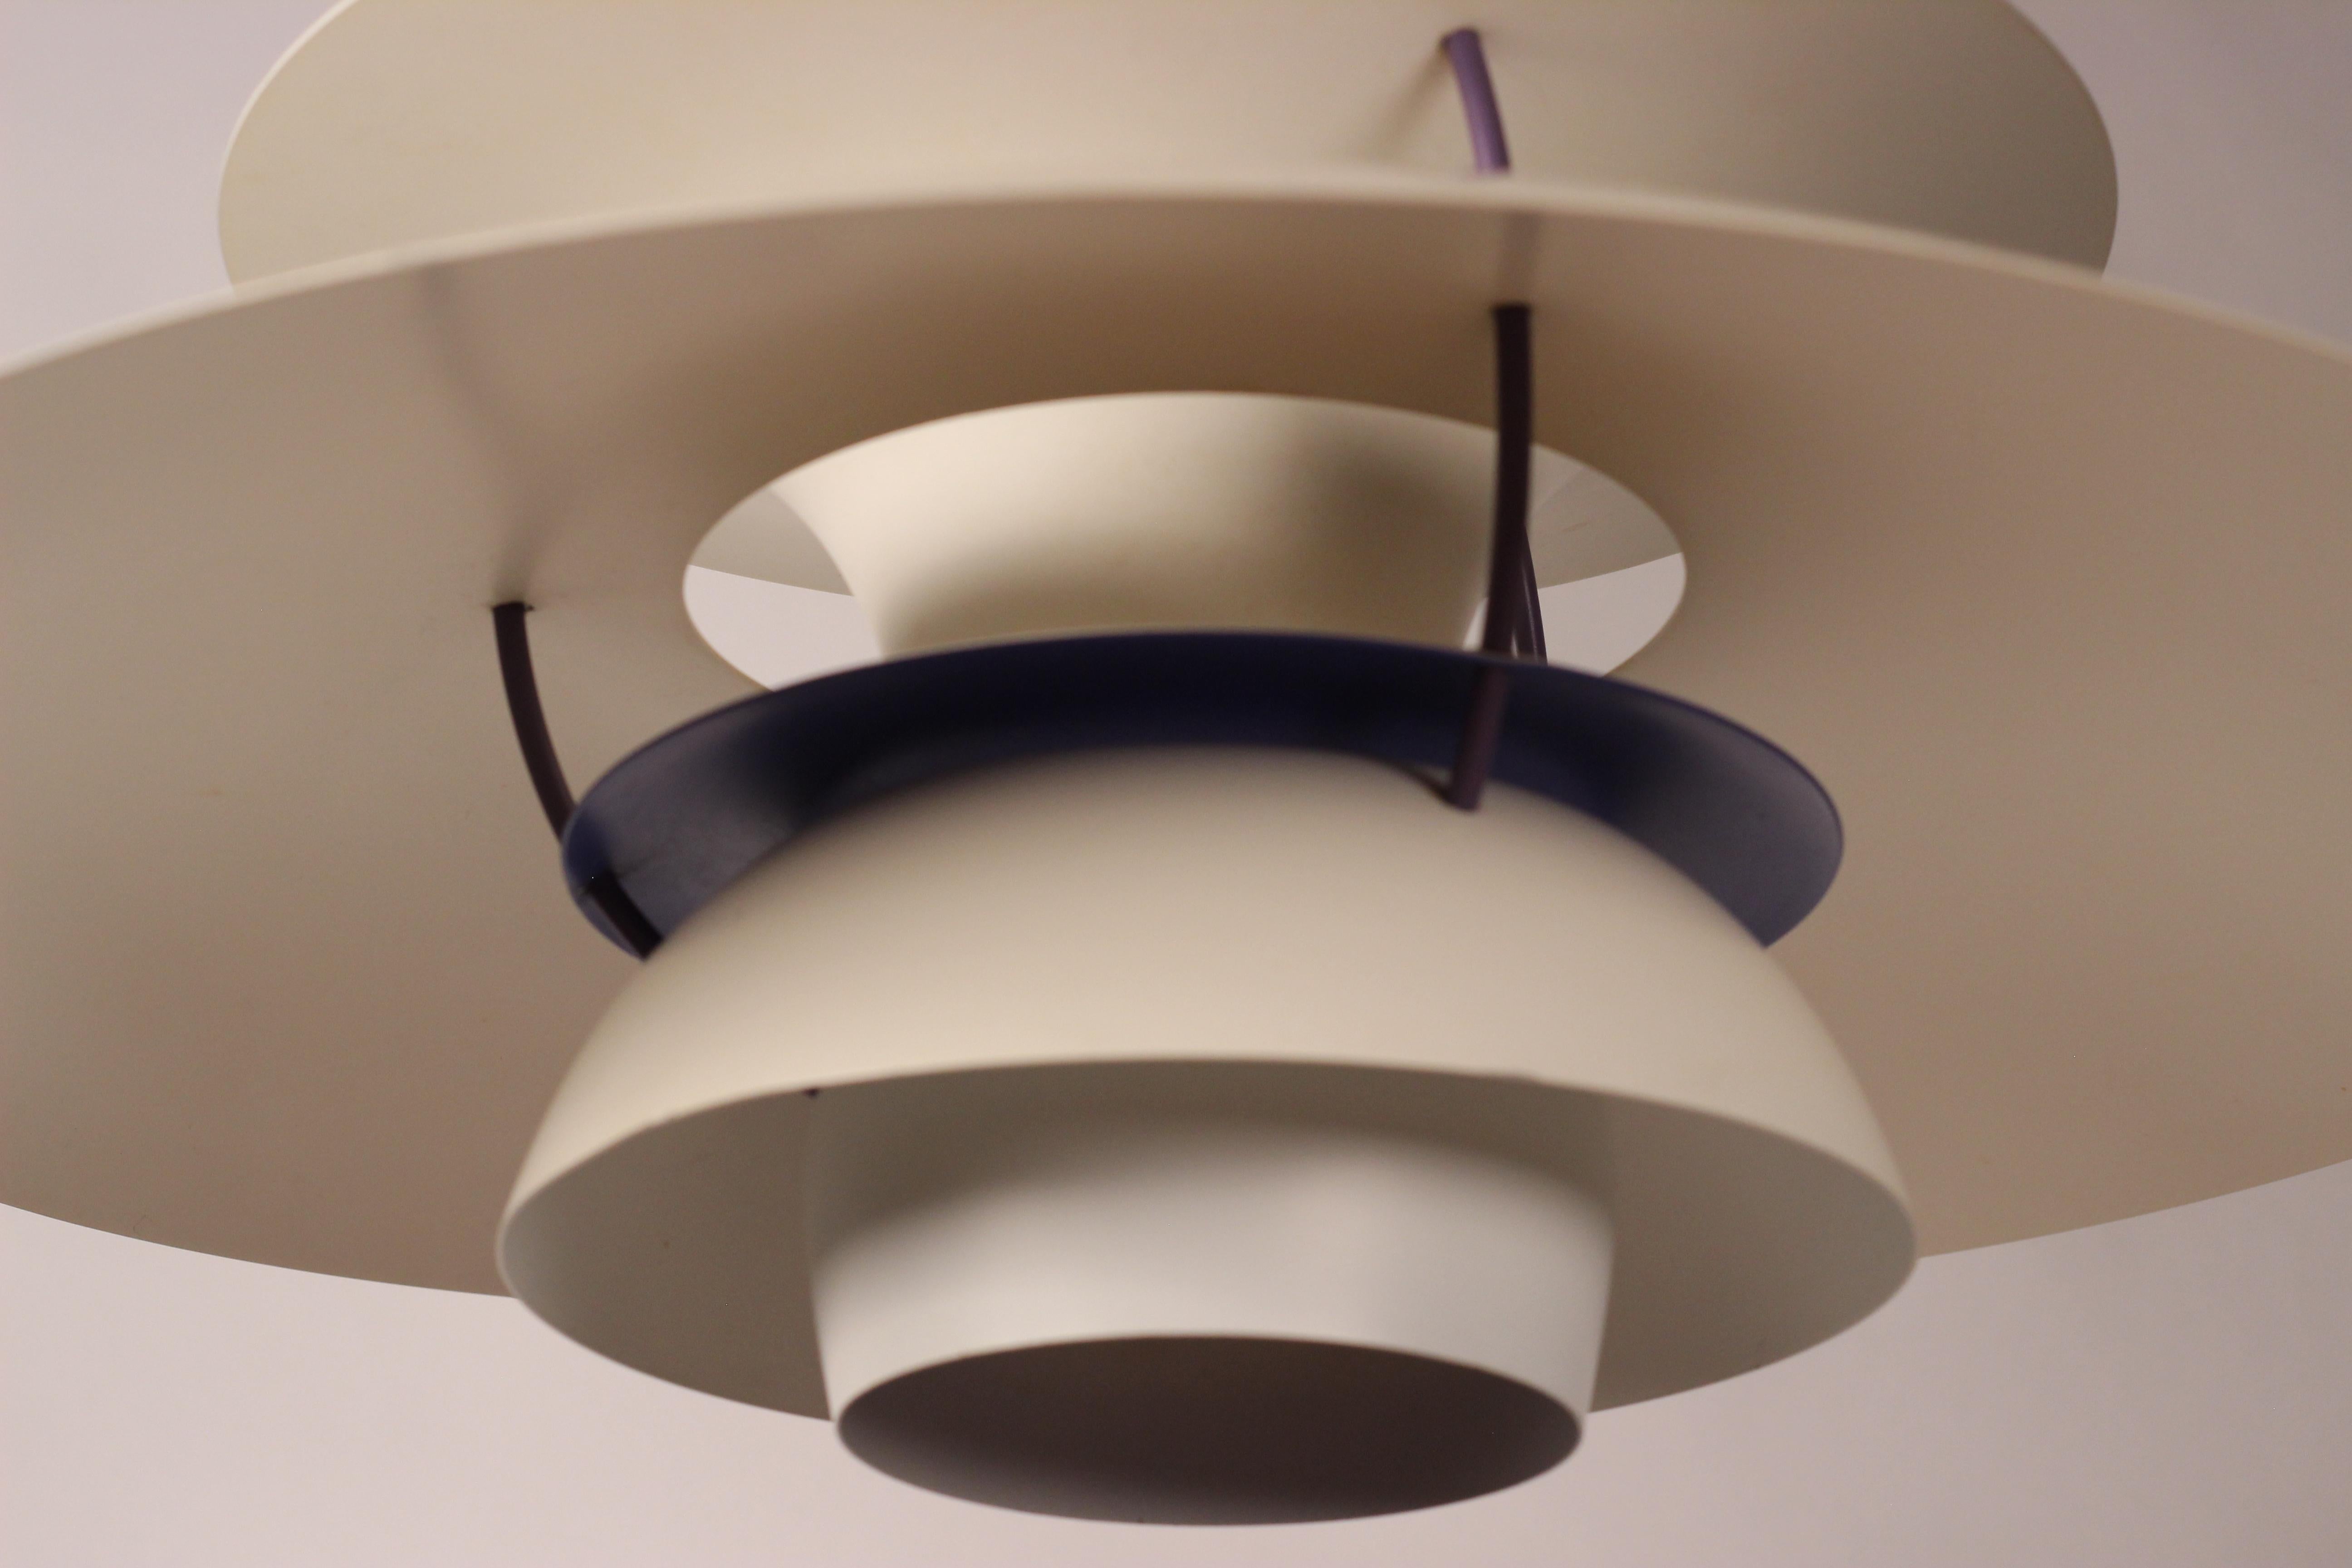 Spun Mid-Century Modern PH5 Classic Pendant Light Designed by Poul Henningsen, 1960’s